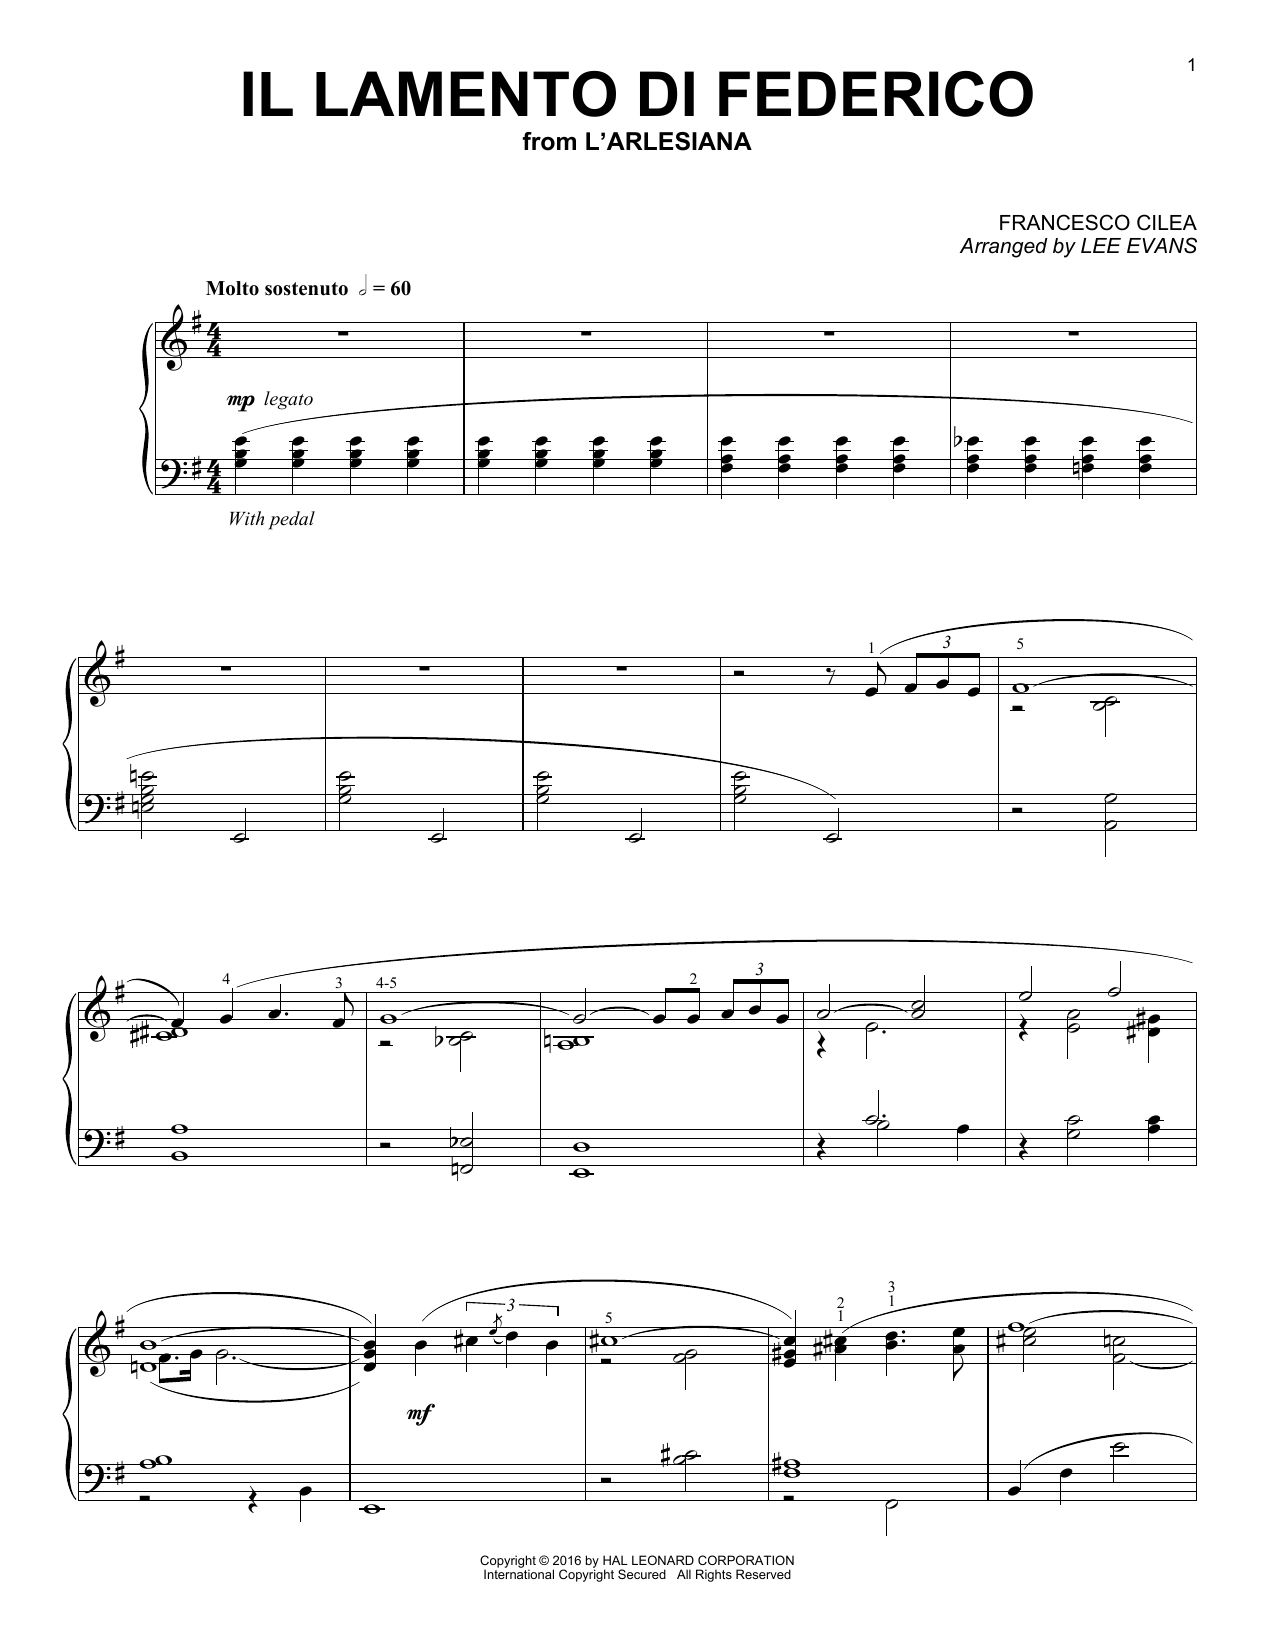 Francesco Cilea ll lamento di Federico (arr. Lee Evans) sheet music notes and chords arranged for Piano Solo